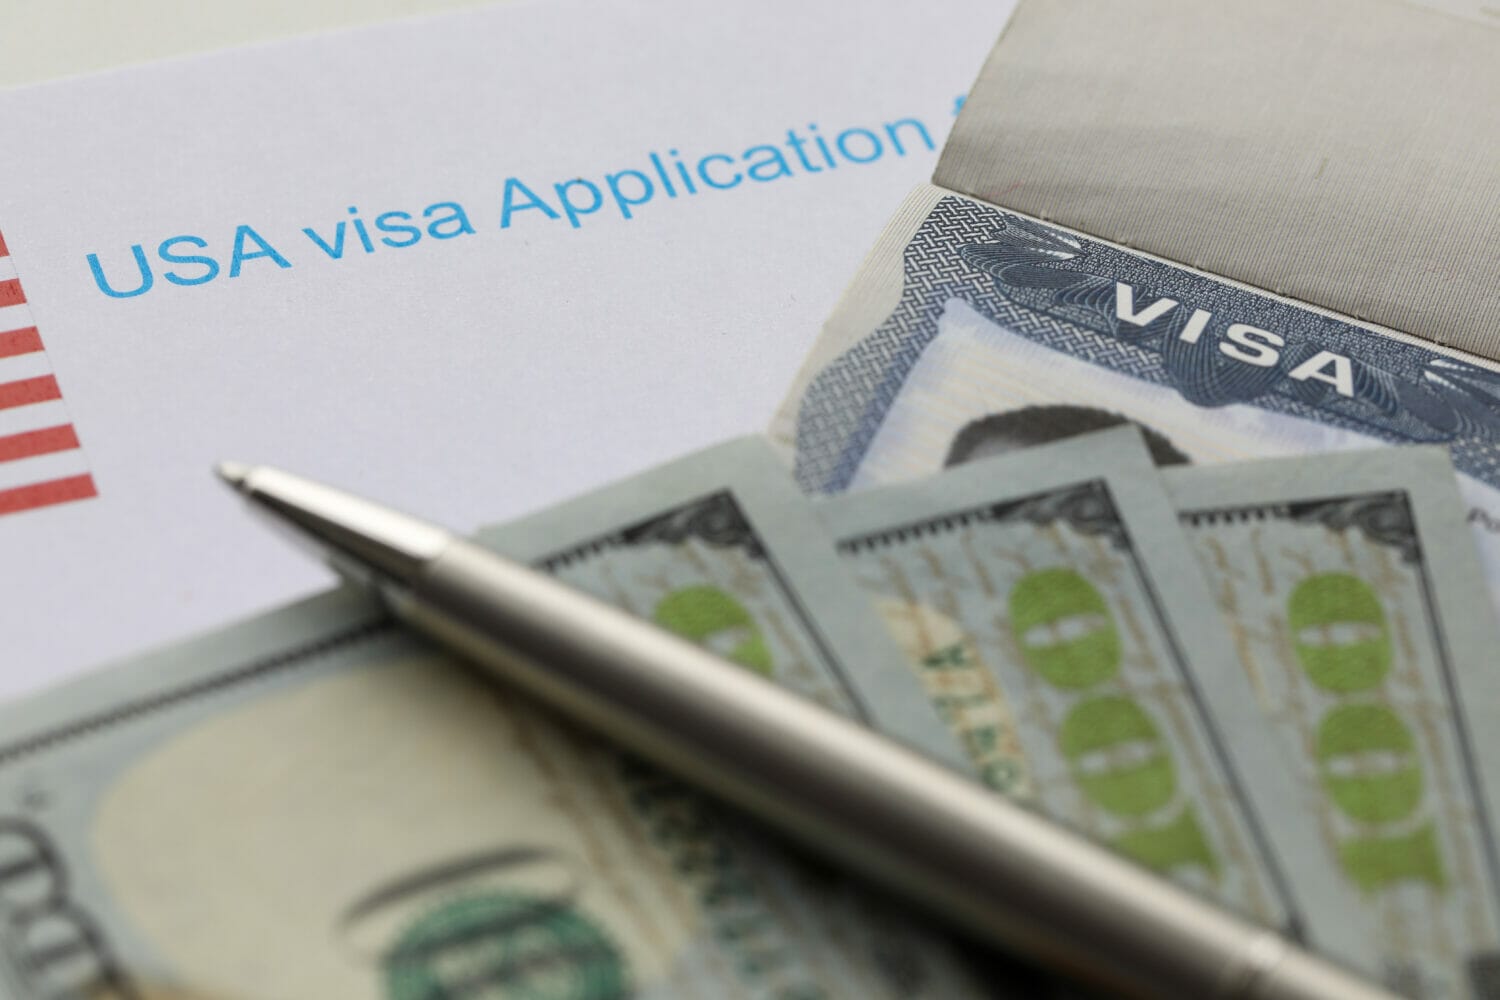 US Visa application, passport and money